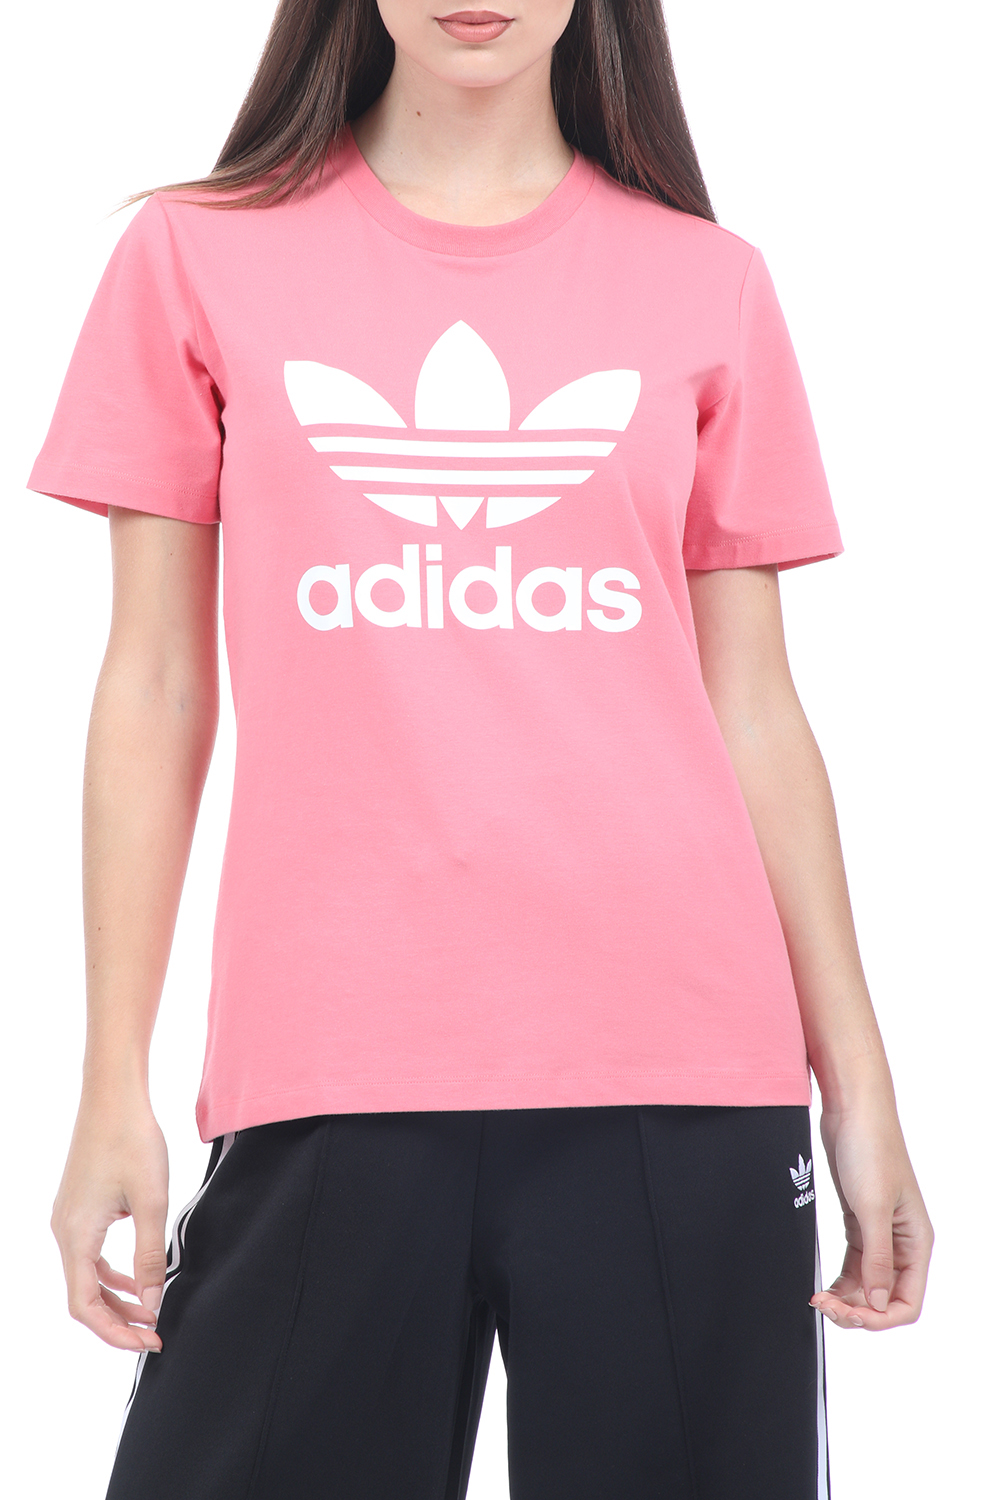 adidas Originals – Γυναικείο t-shirt adidas Originals TREFOIL ροζ 1810713.0-01P3